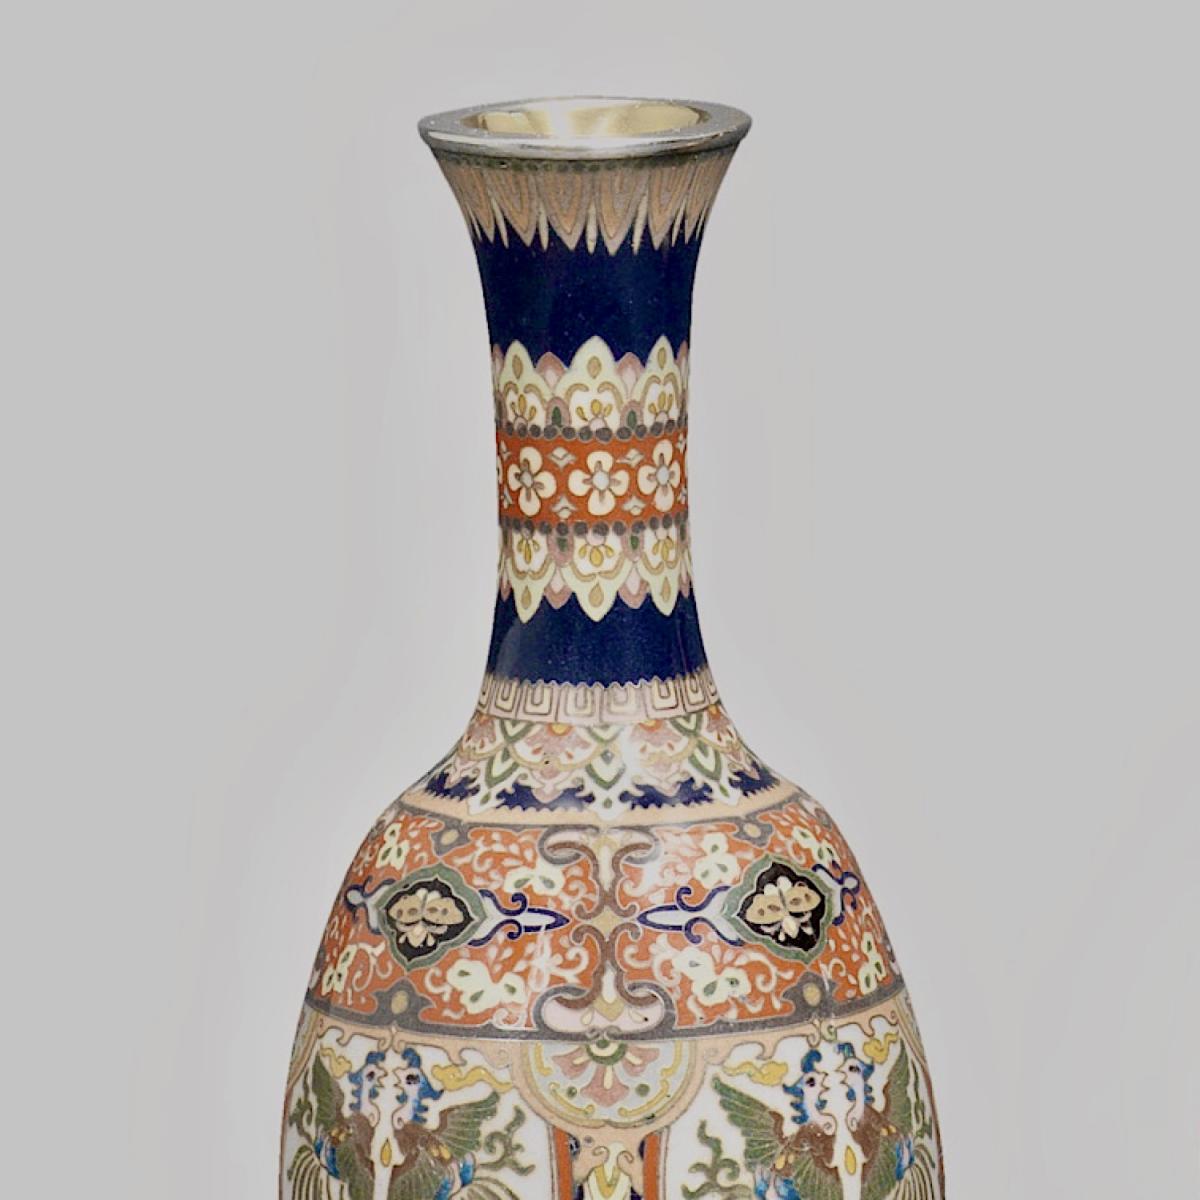 Japanese pair of cloisonné enamel vases signed Kuhn and Komor, Meiji Period